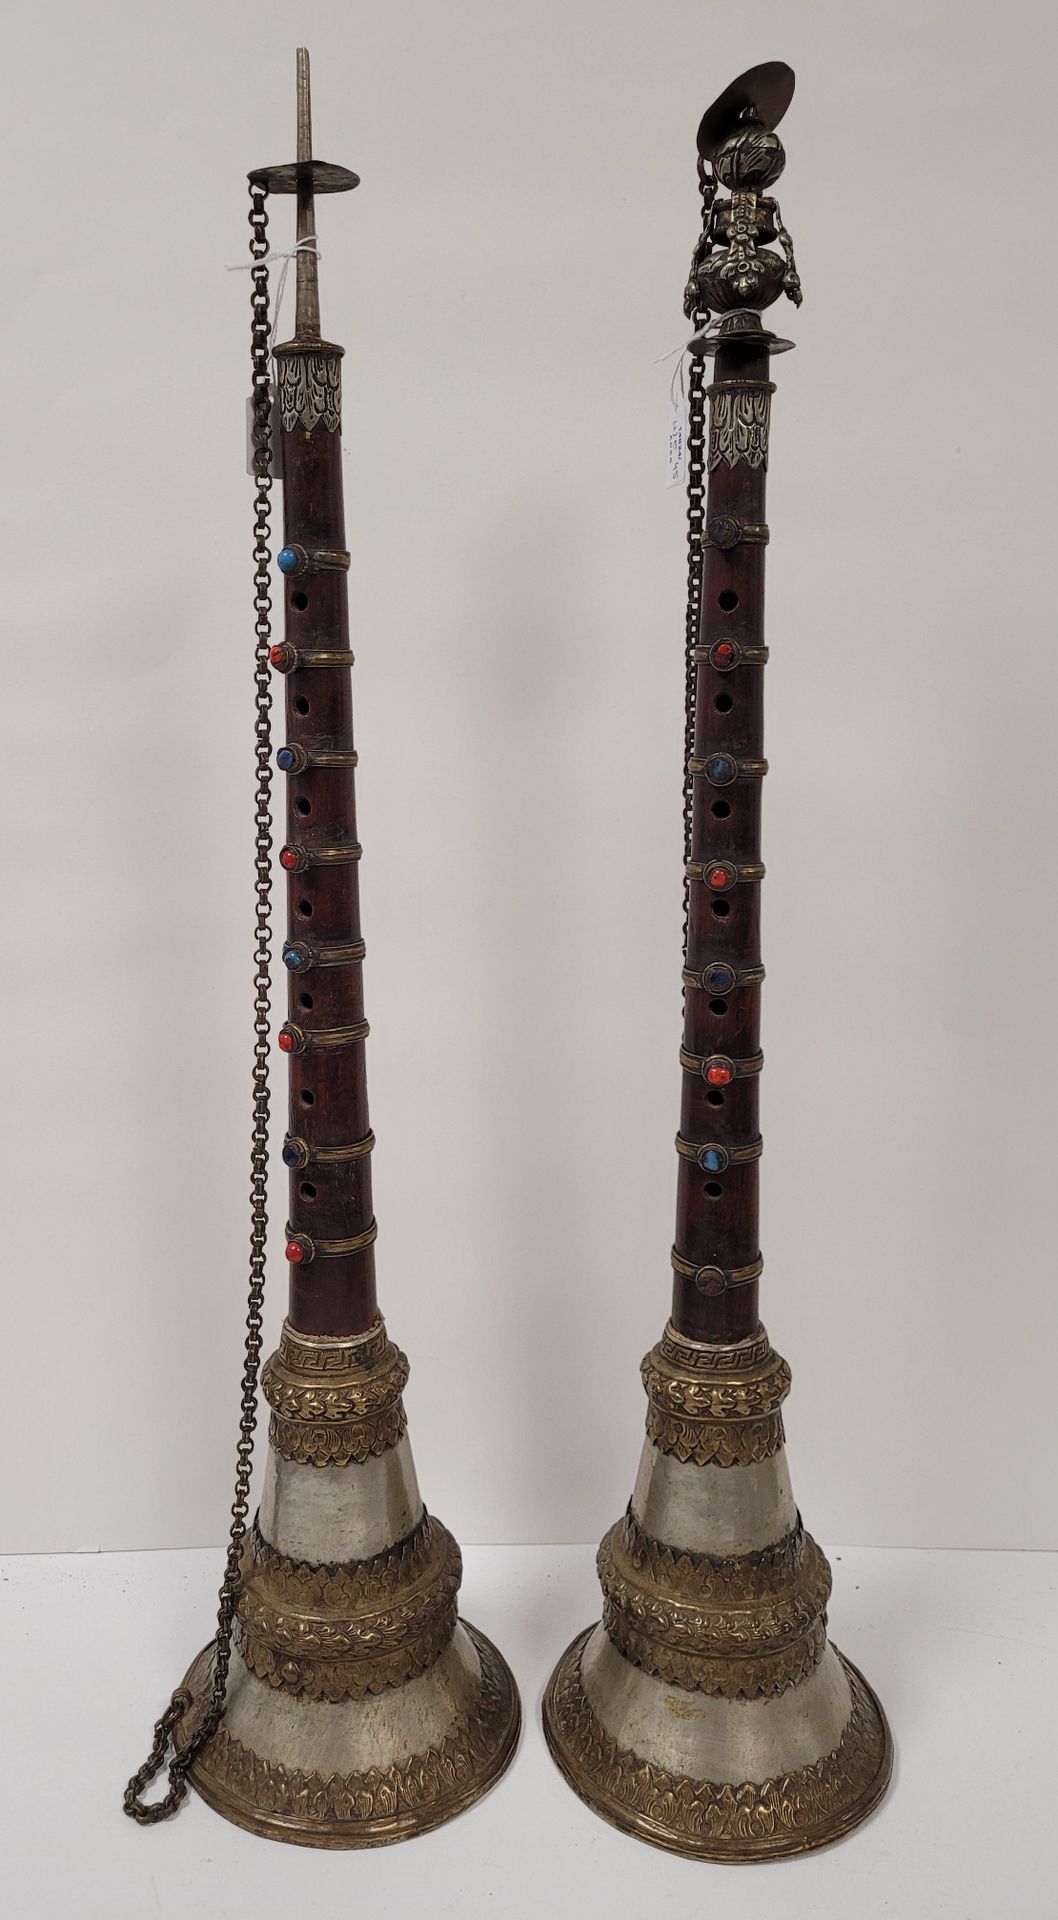 Null 两支终端烟斗（dung-dun），西藏，20
世纪木制
烟斗镶嵌凸圆形
树脂环，金属终端口
。

长度：58厘米